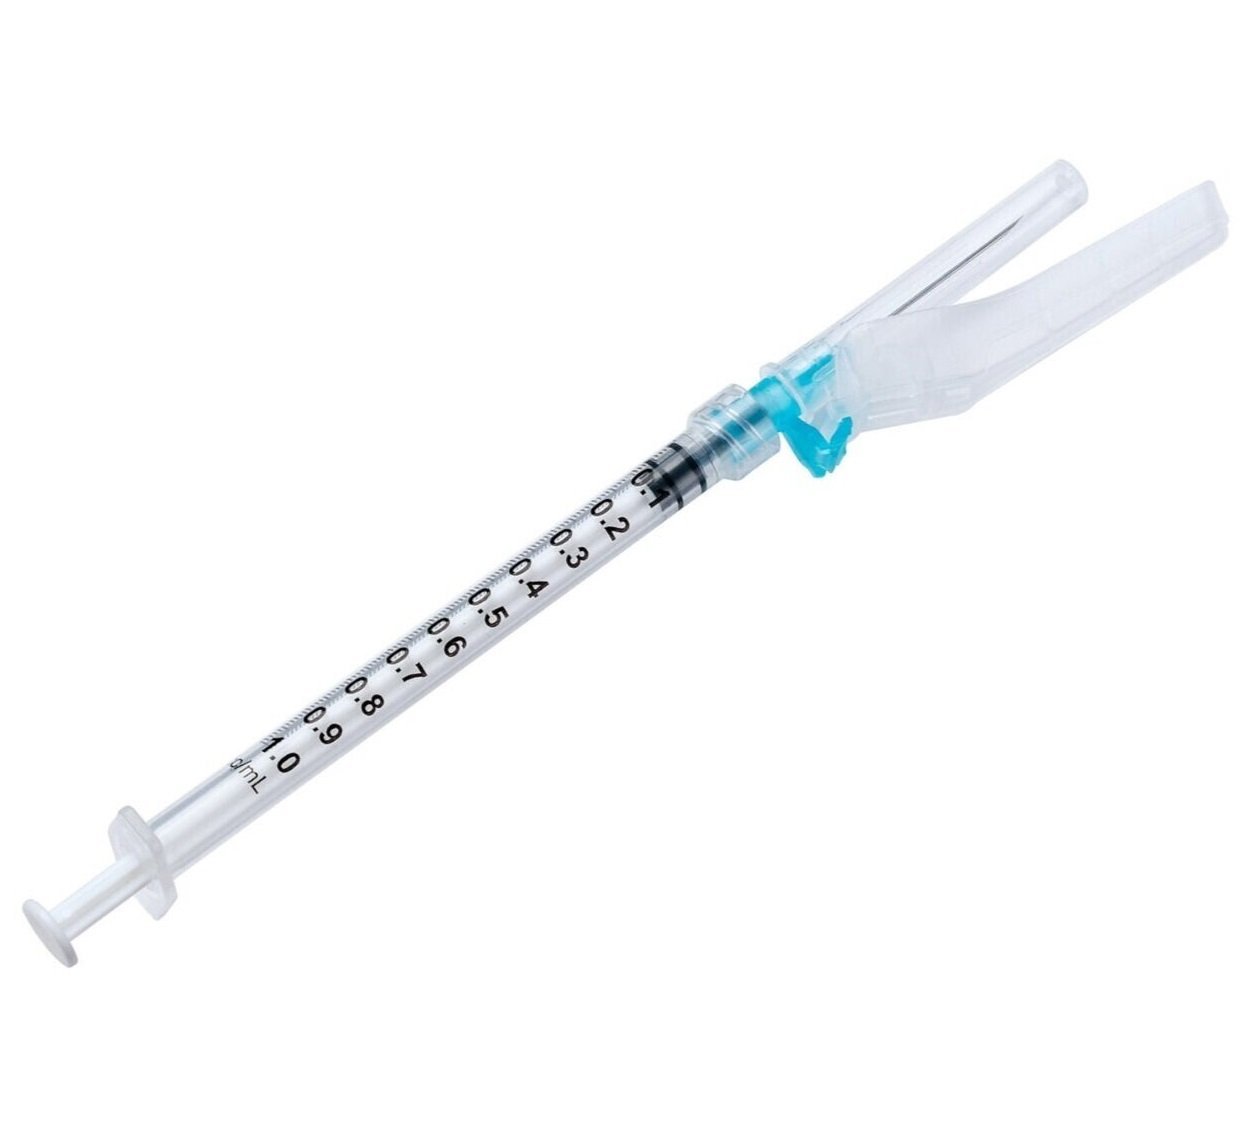 REF+2110+(1)+ONE-CARE+Syringe+1ml+with+Safety+Needle+25Gx1inch.jpeg